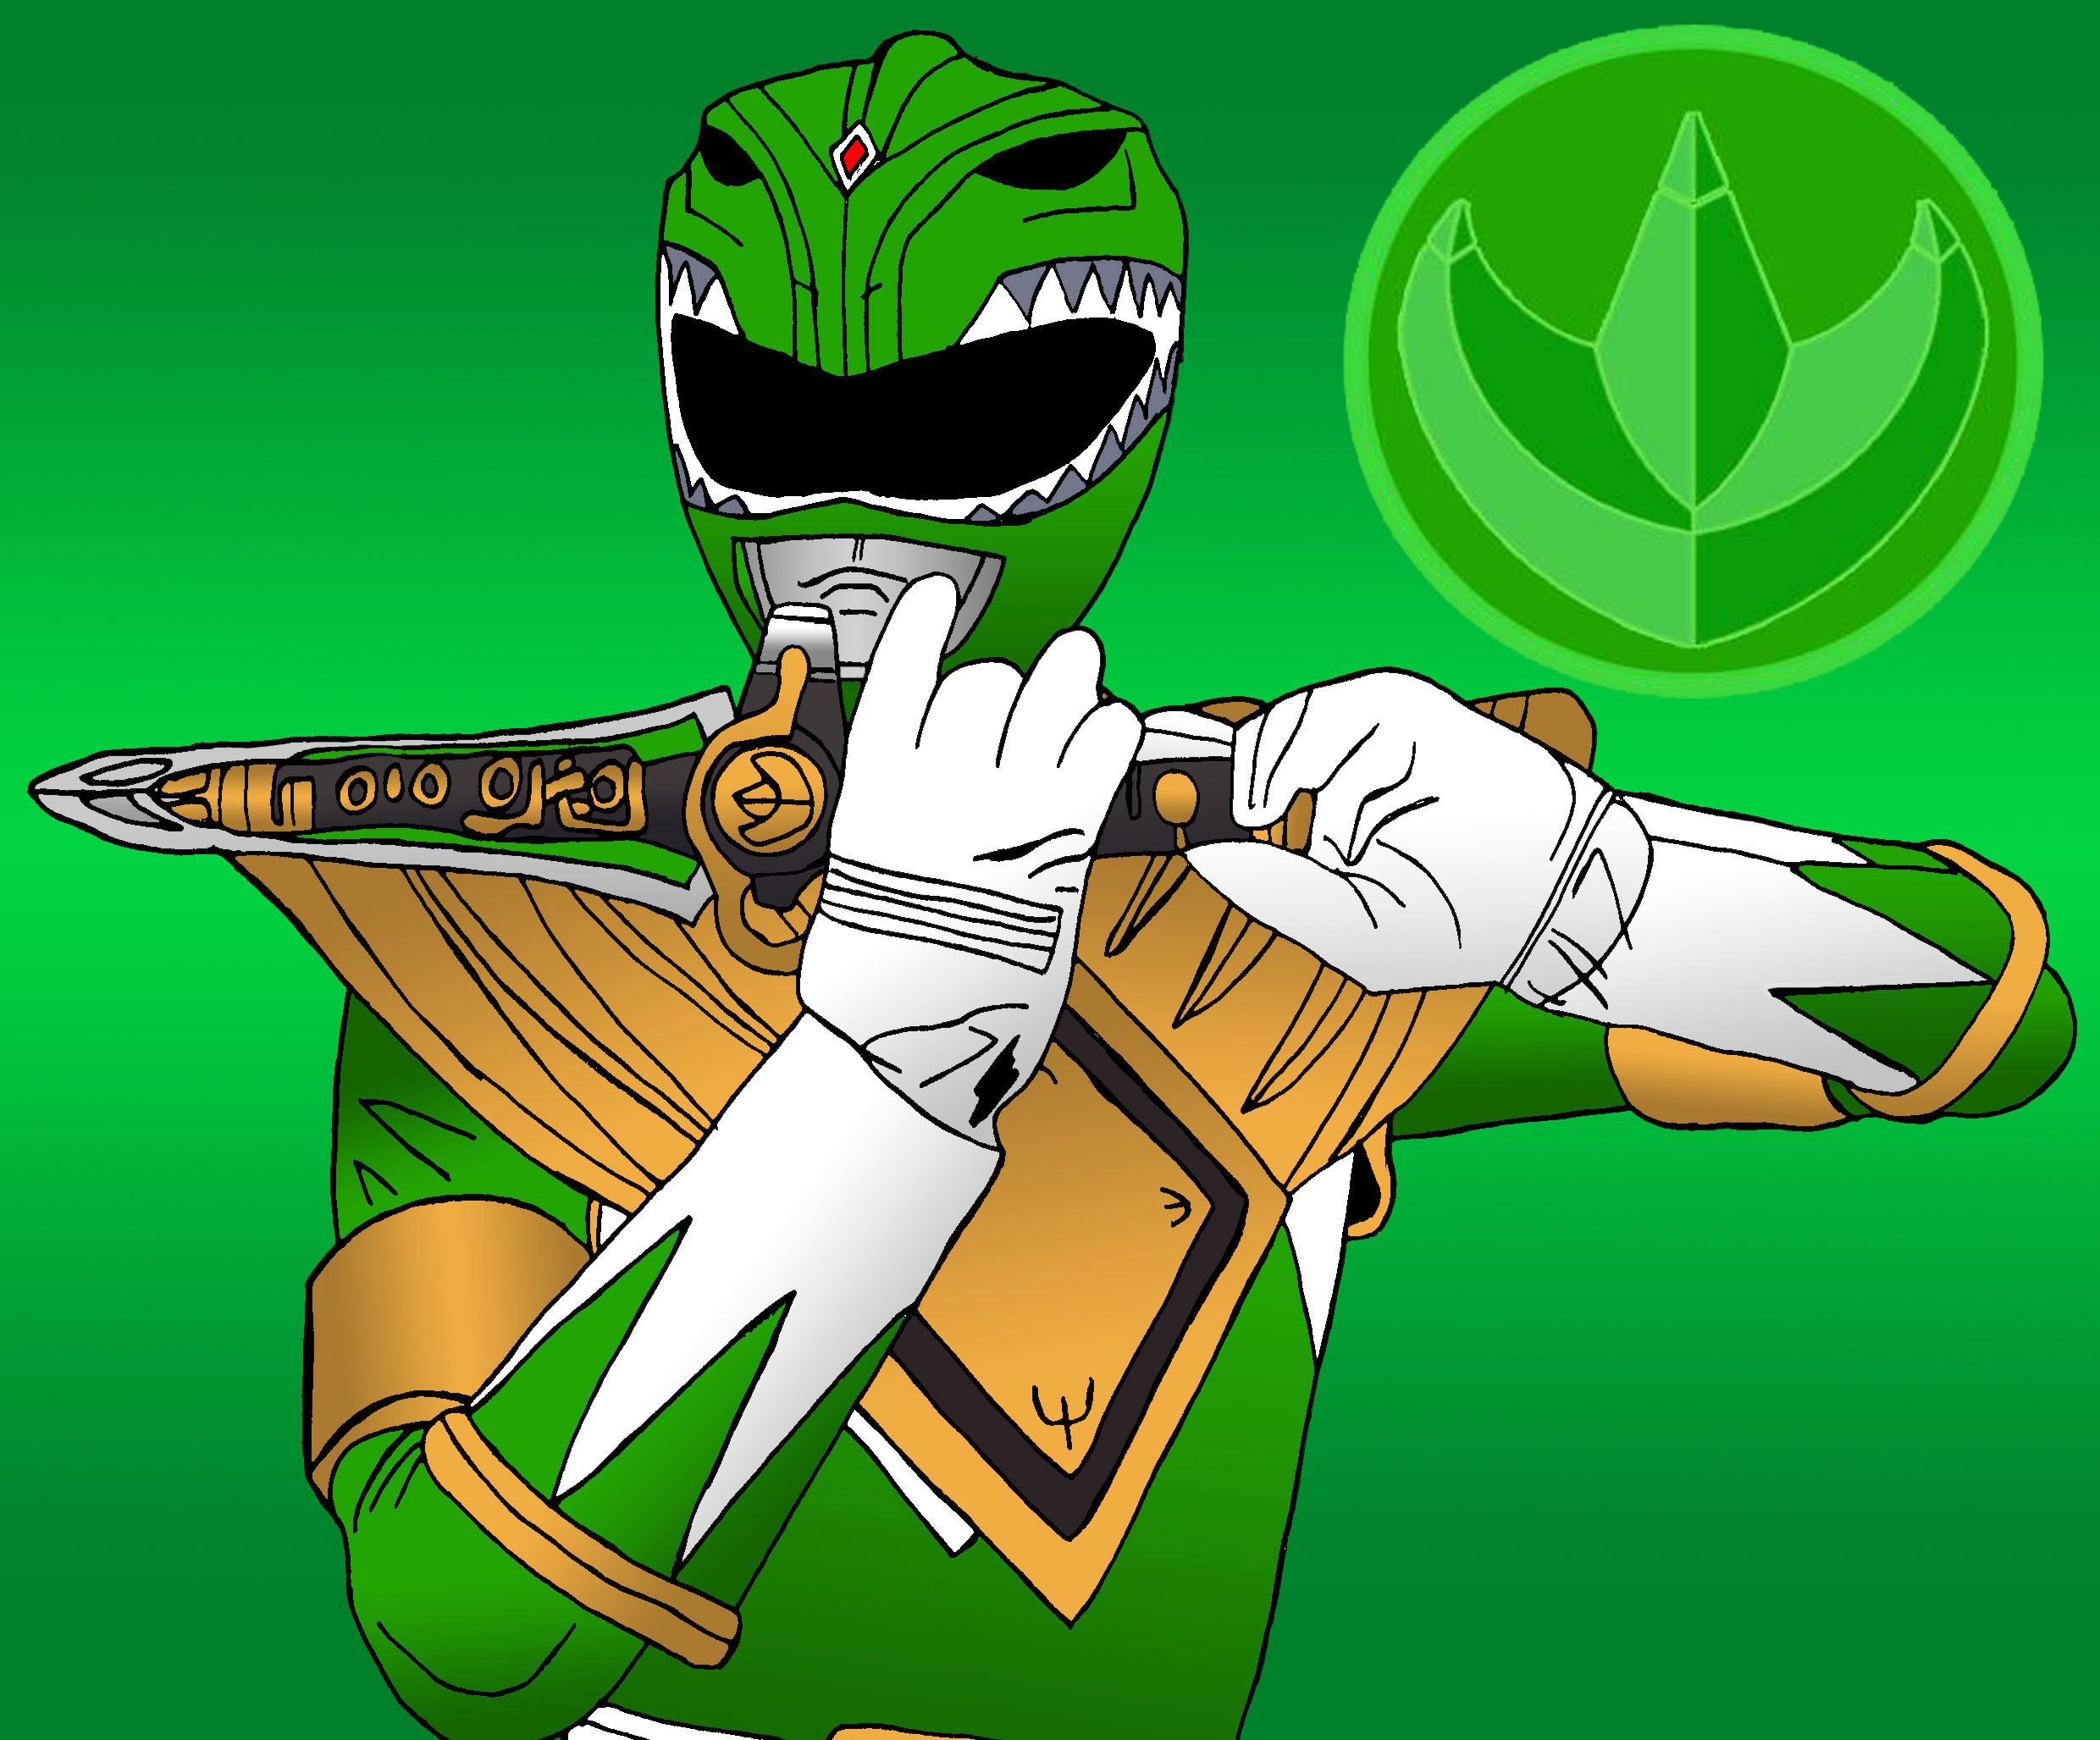 Mighty Morphin Green Ranger by Super-TyBone82 on DeviantArt